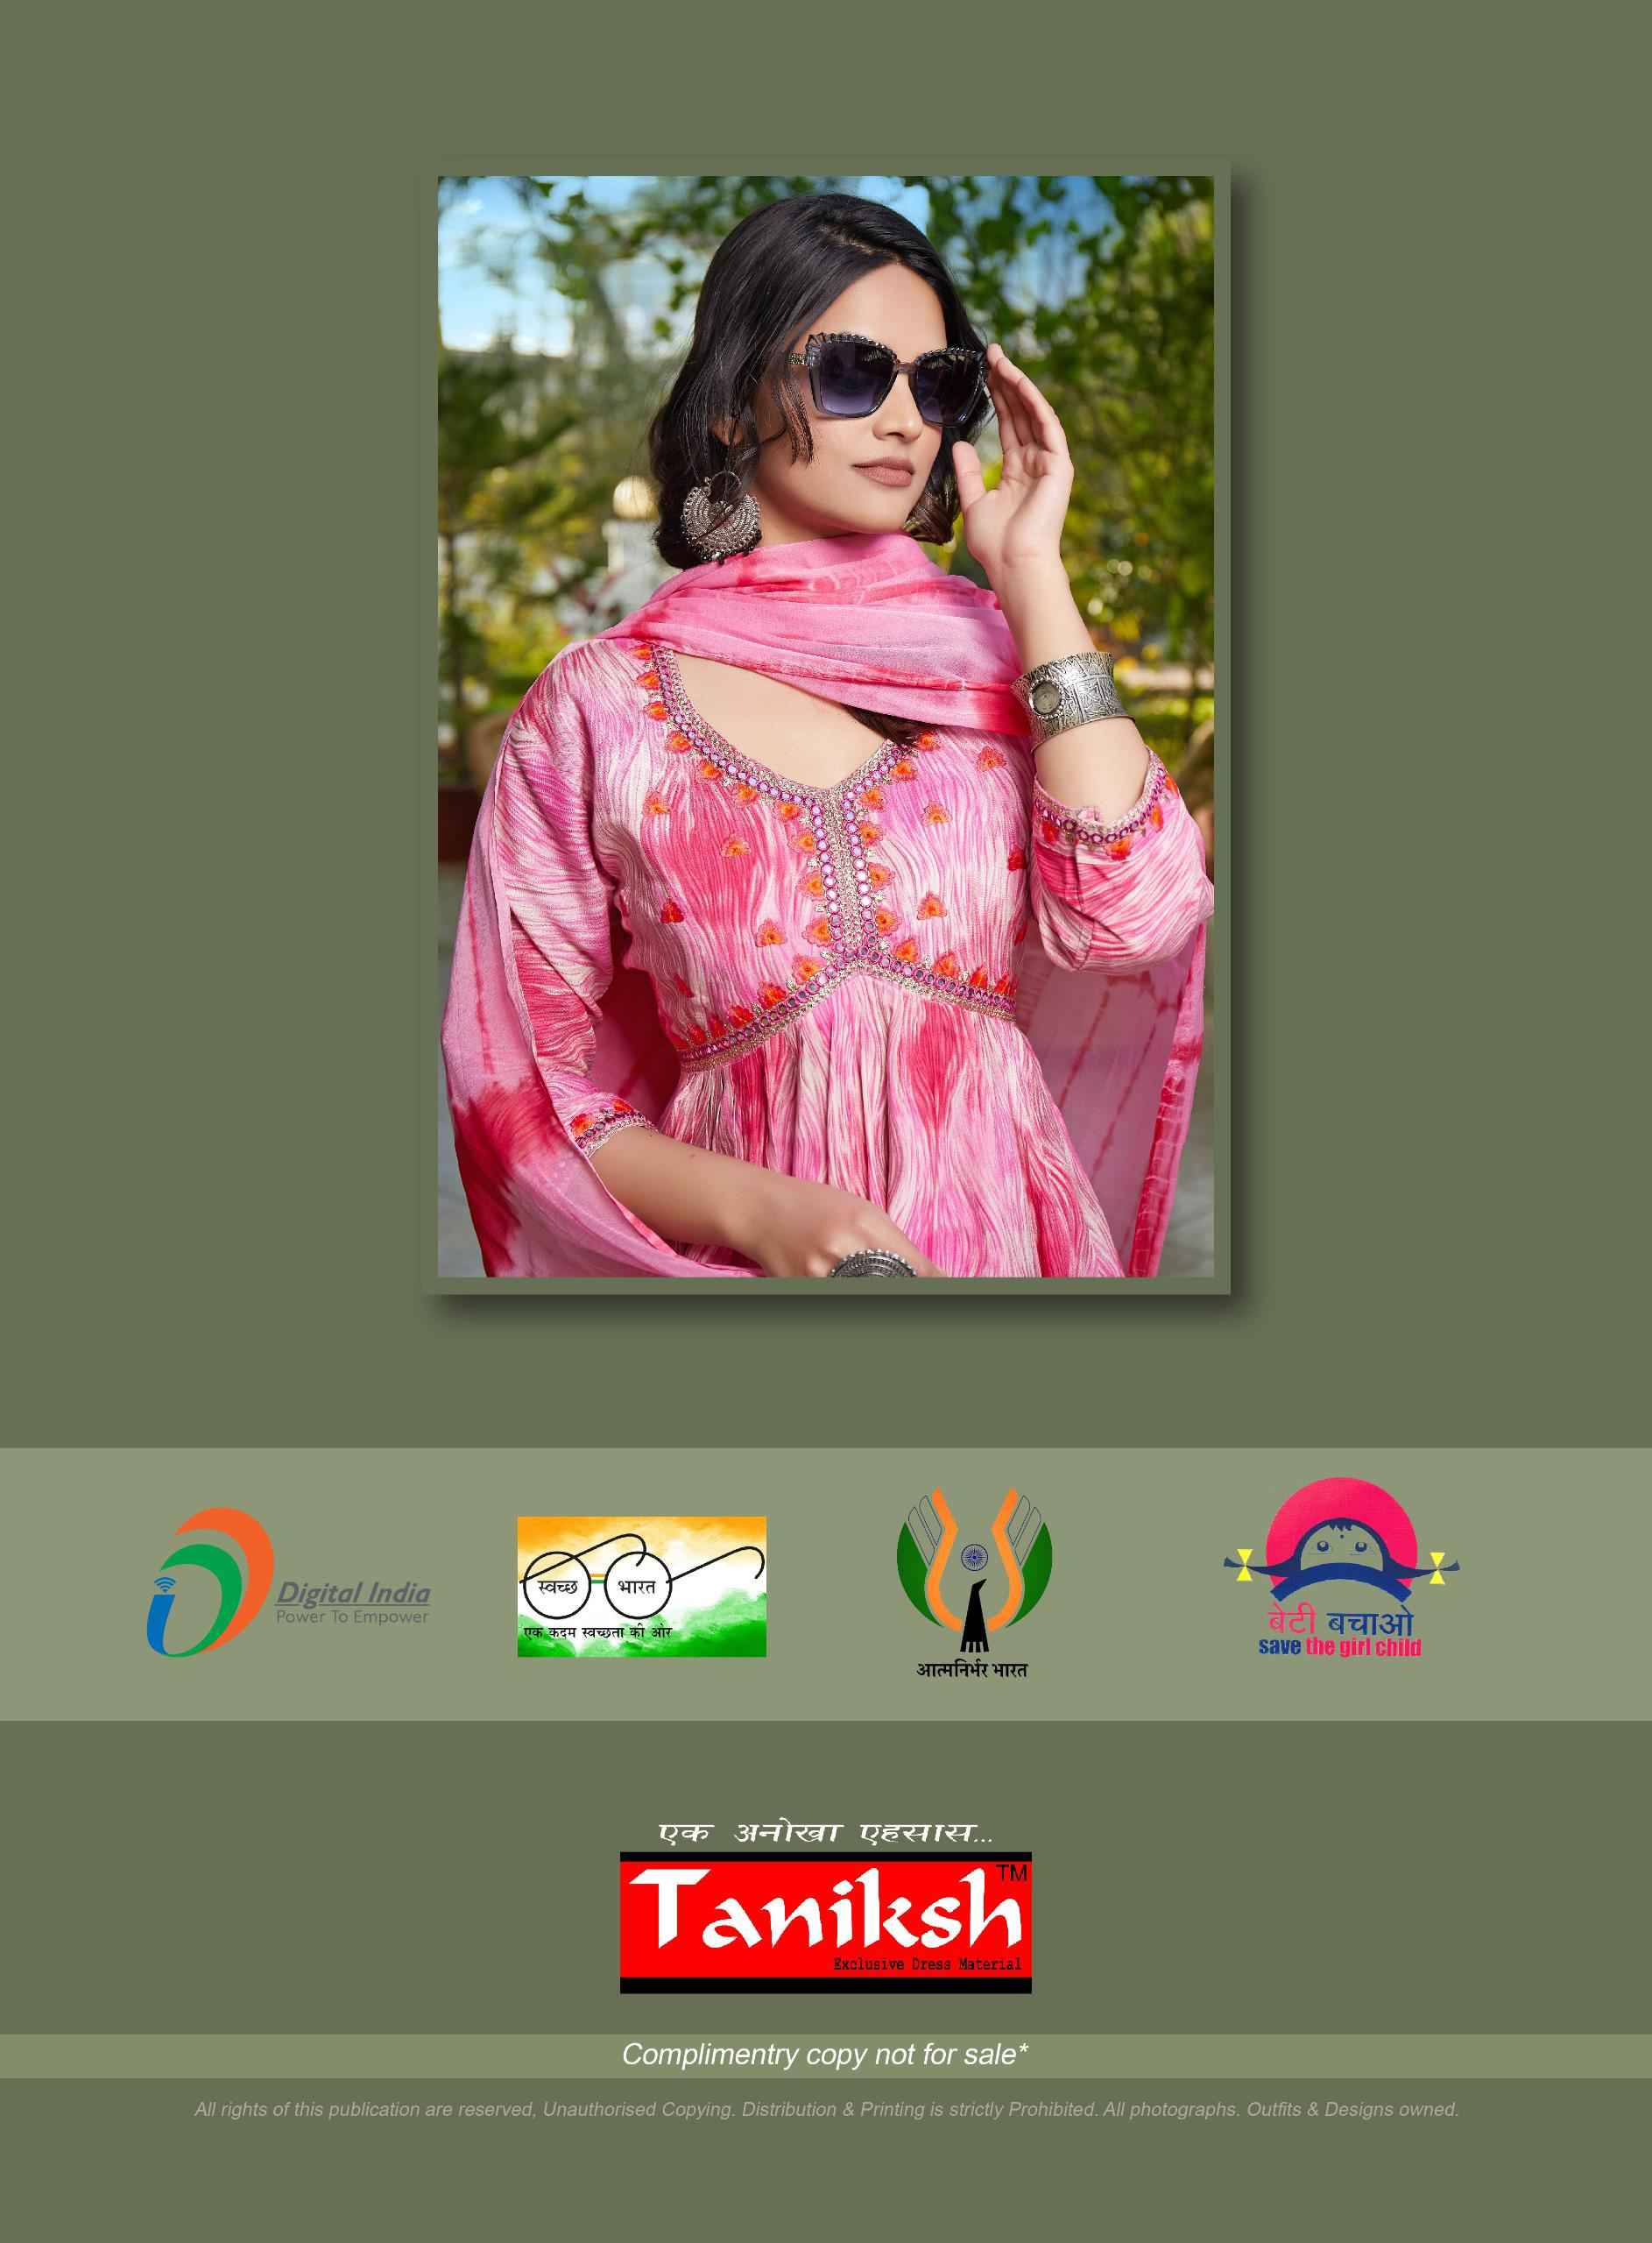 Taniksh Surbhi Vol-2 Rayon Print Readymade Suit (8 Pc Catalouge)